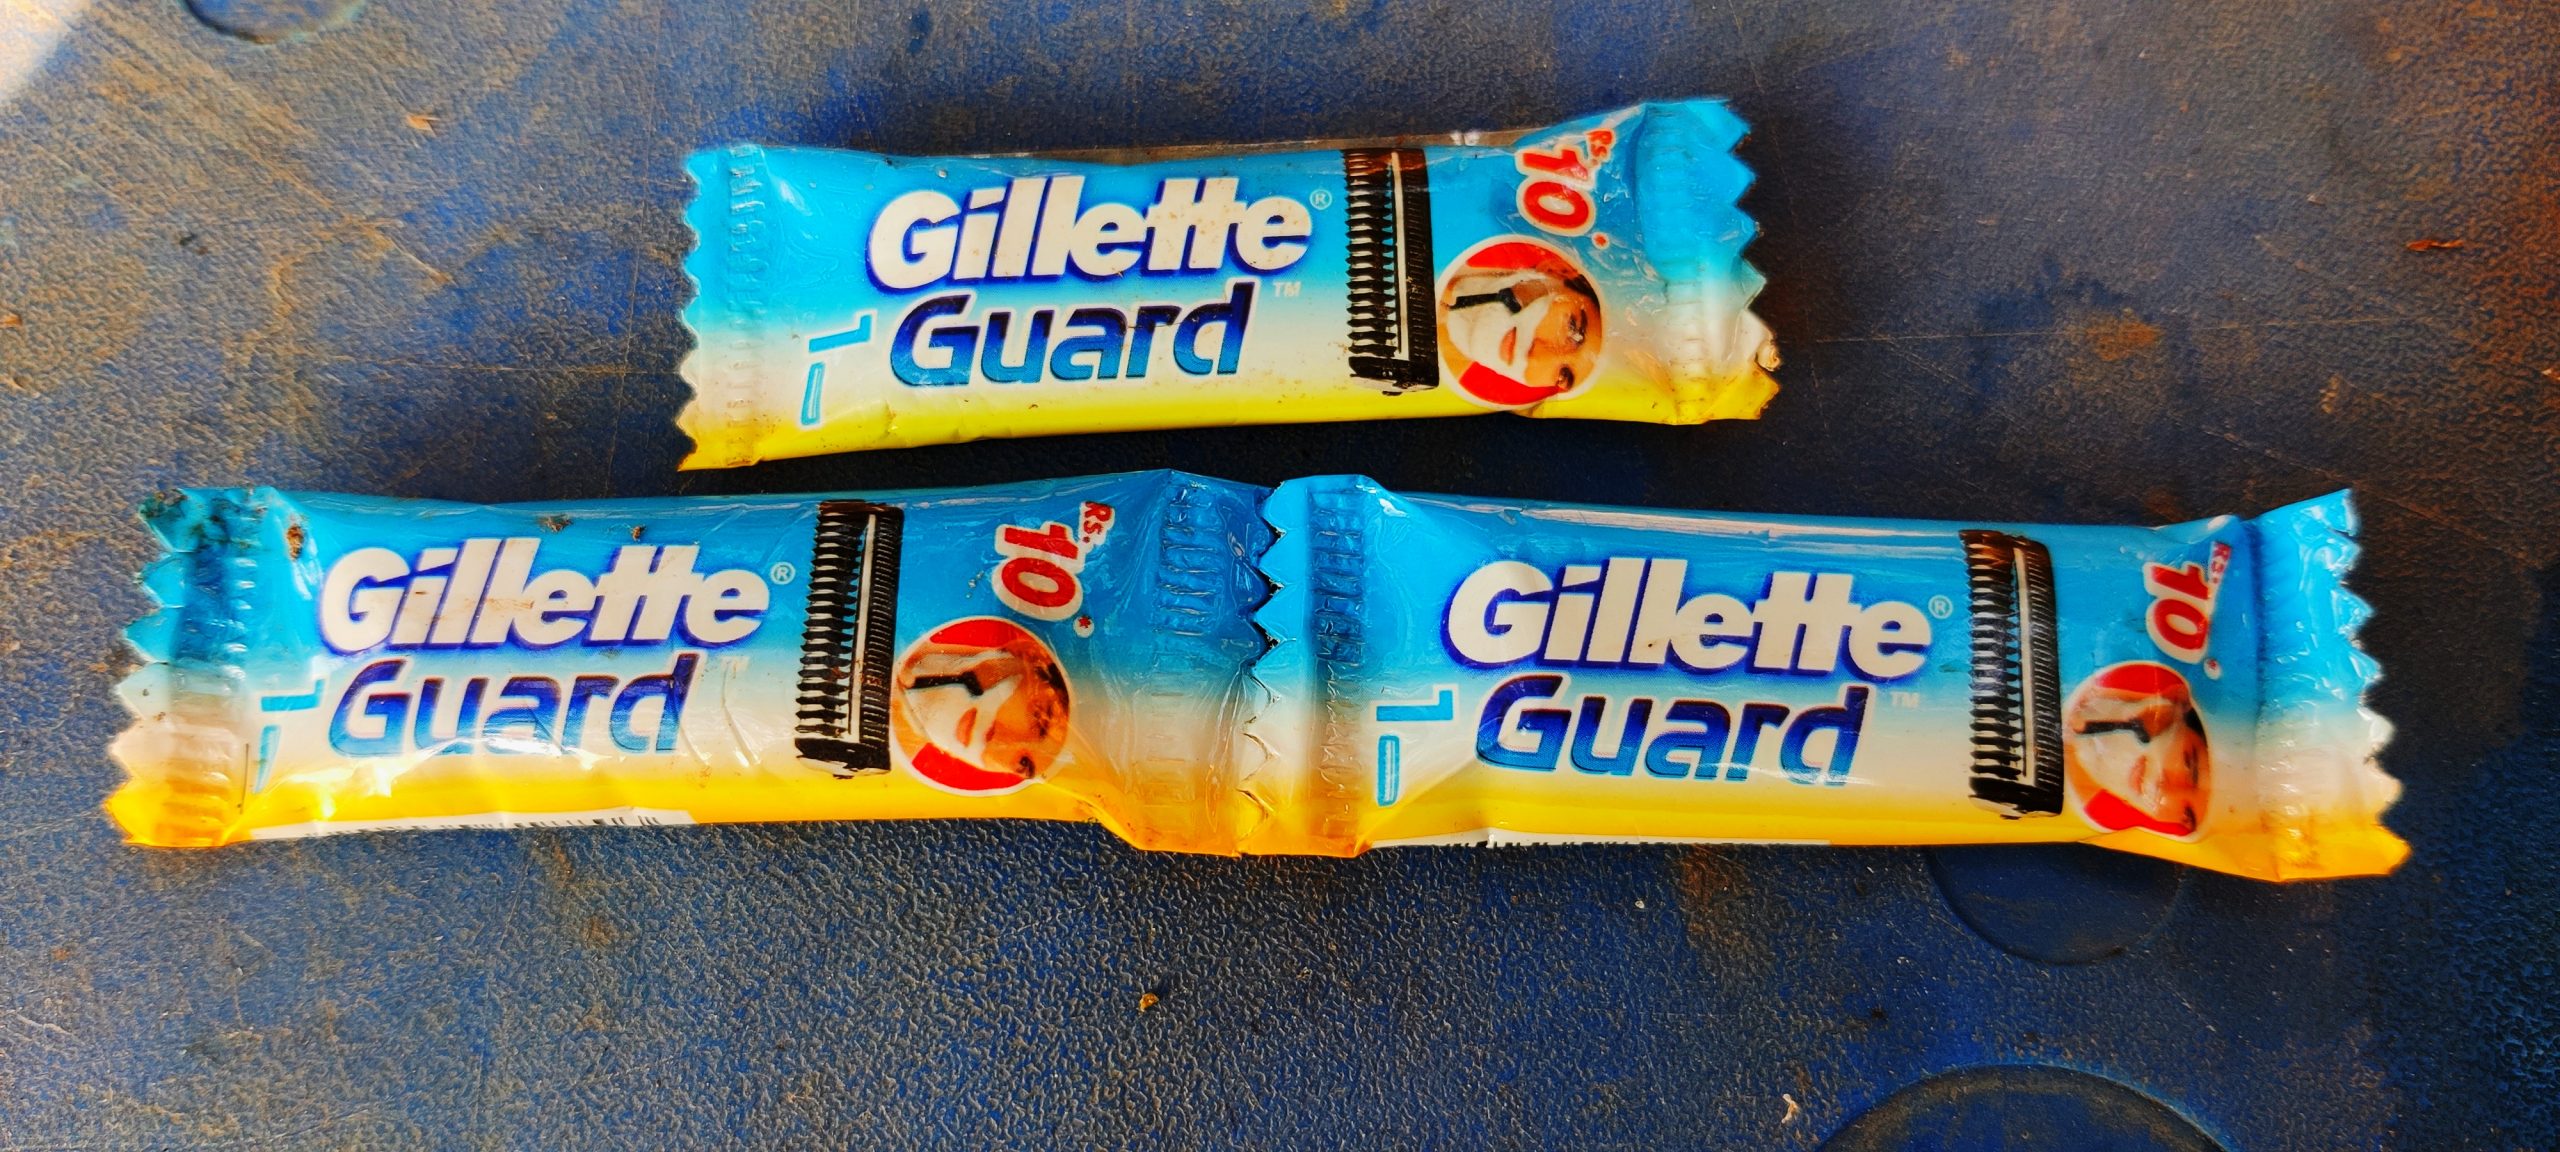 Gillette Guard Razor packs